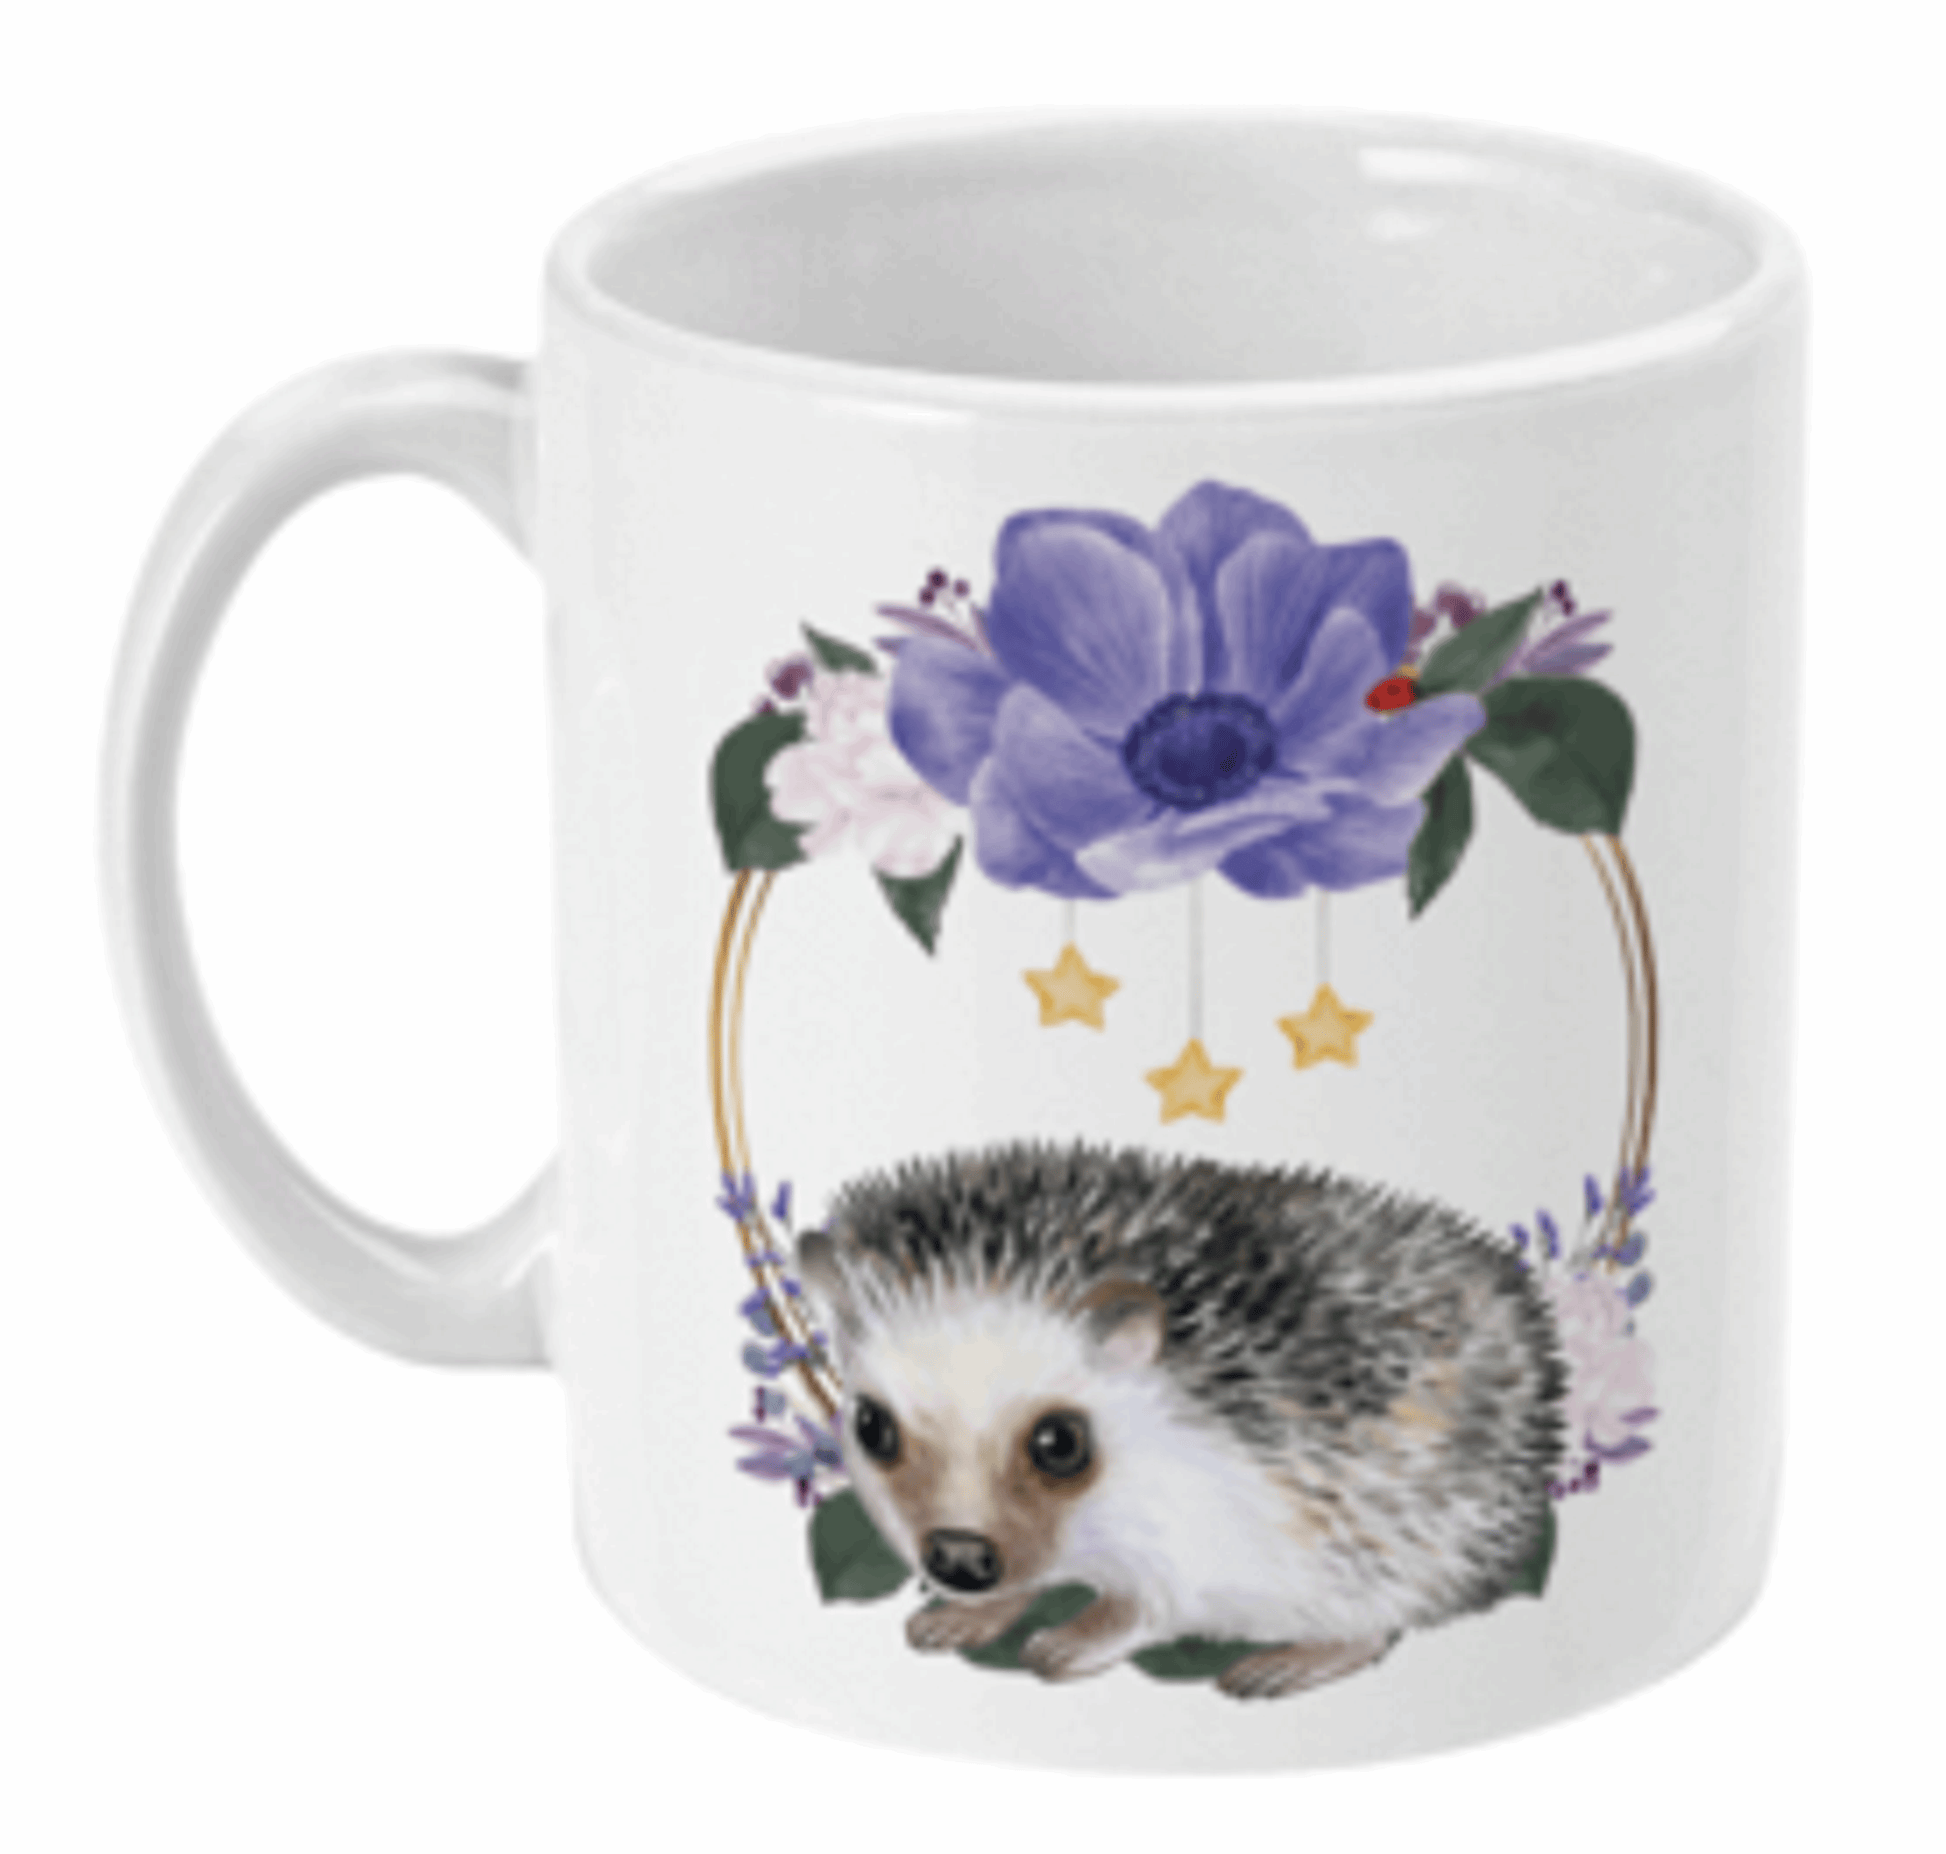  Beautiful Hedgehog Wreath Coffee or Tea Mug by Free Spirit Accessories sold by Free Spirit Accessories